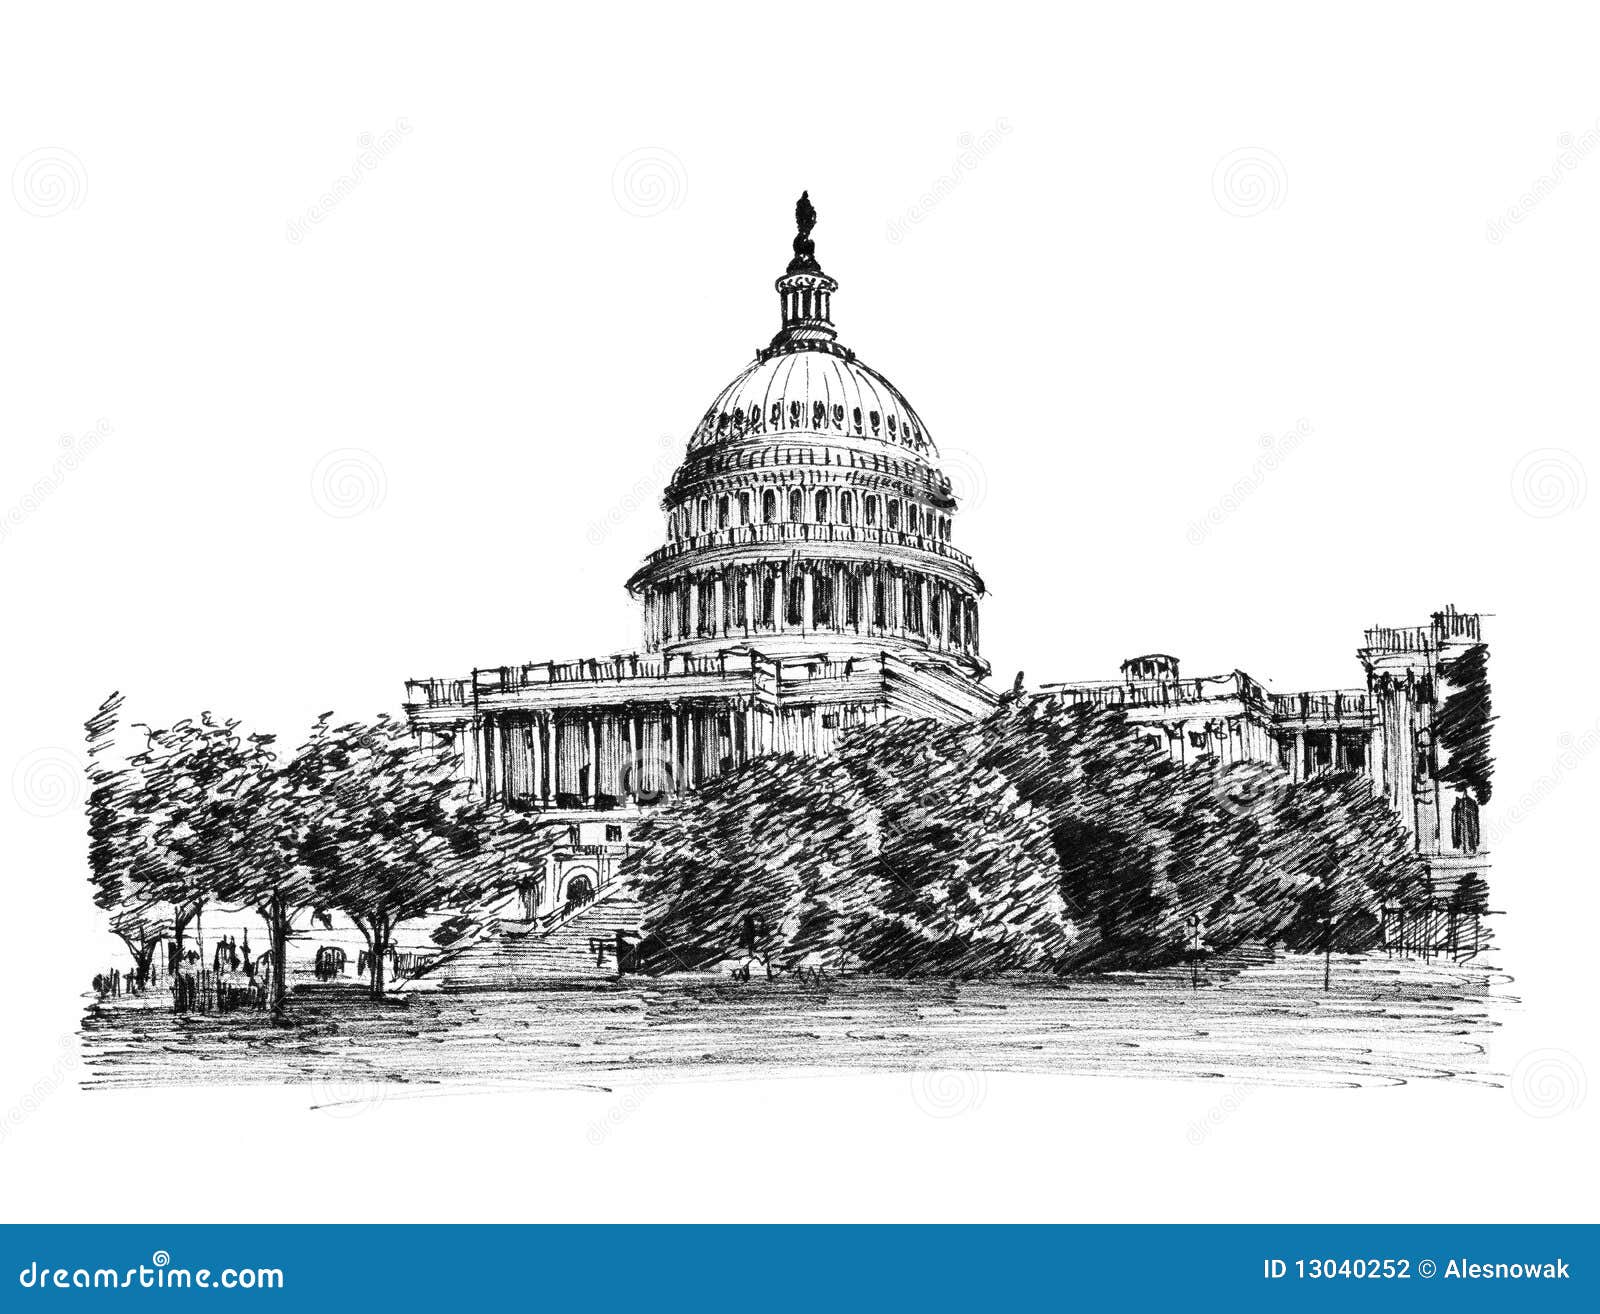 US Capitol stock illustration. Illustration of architecture - 13040252